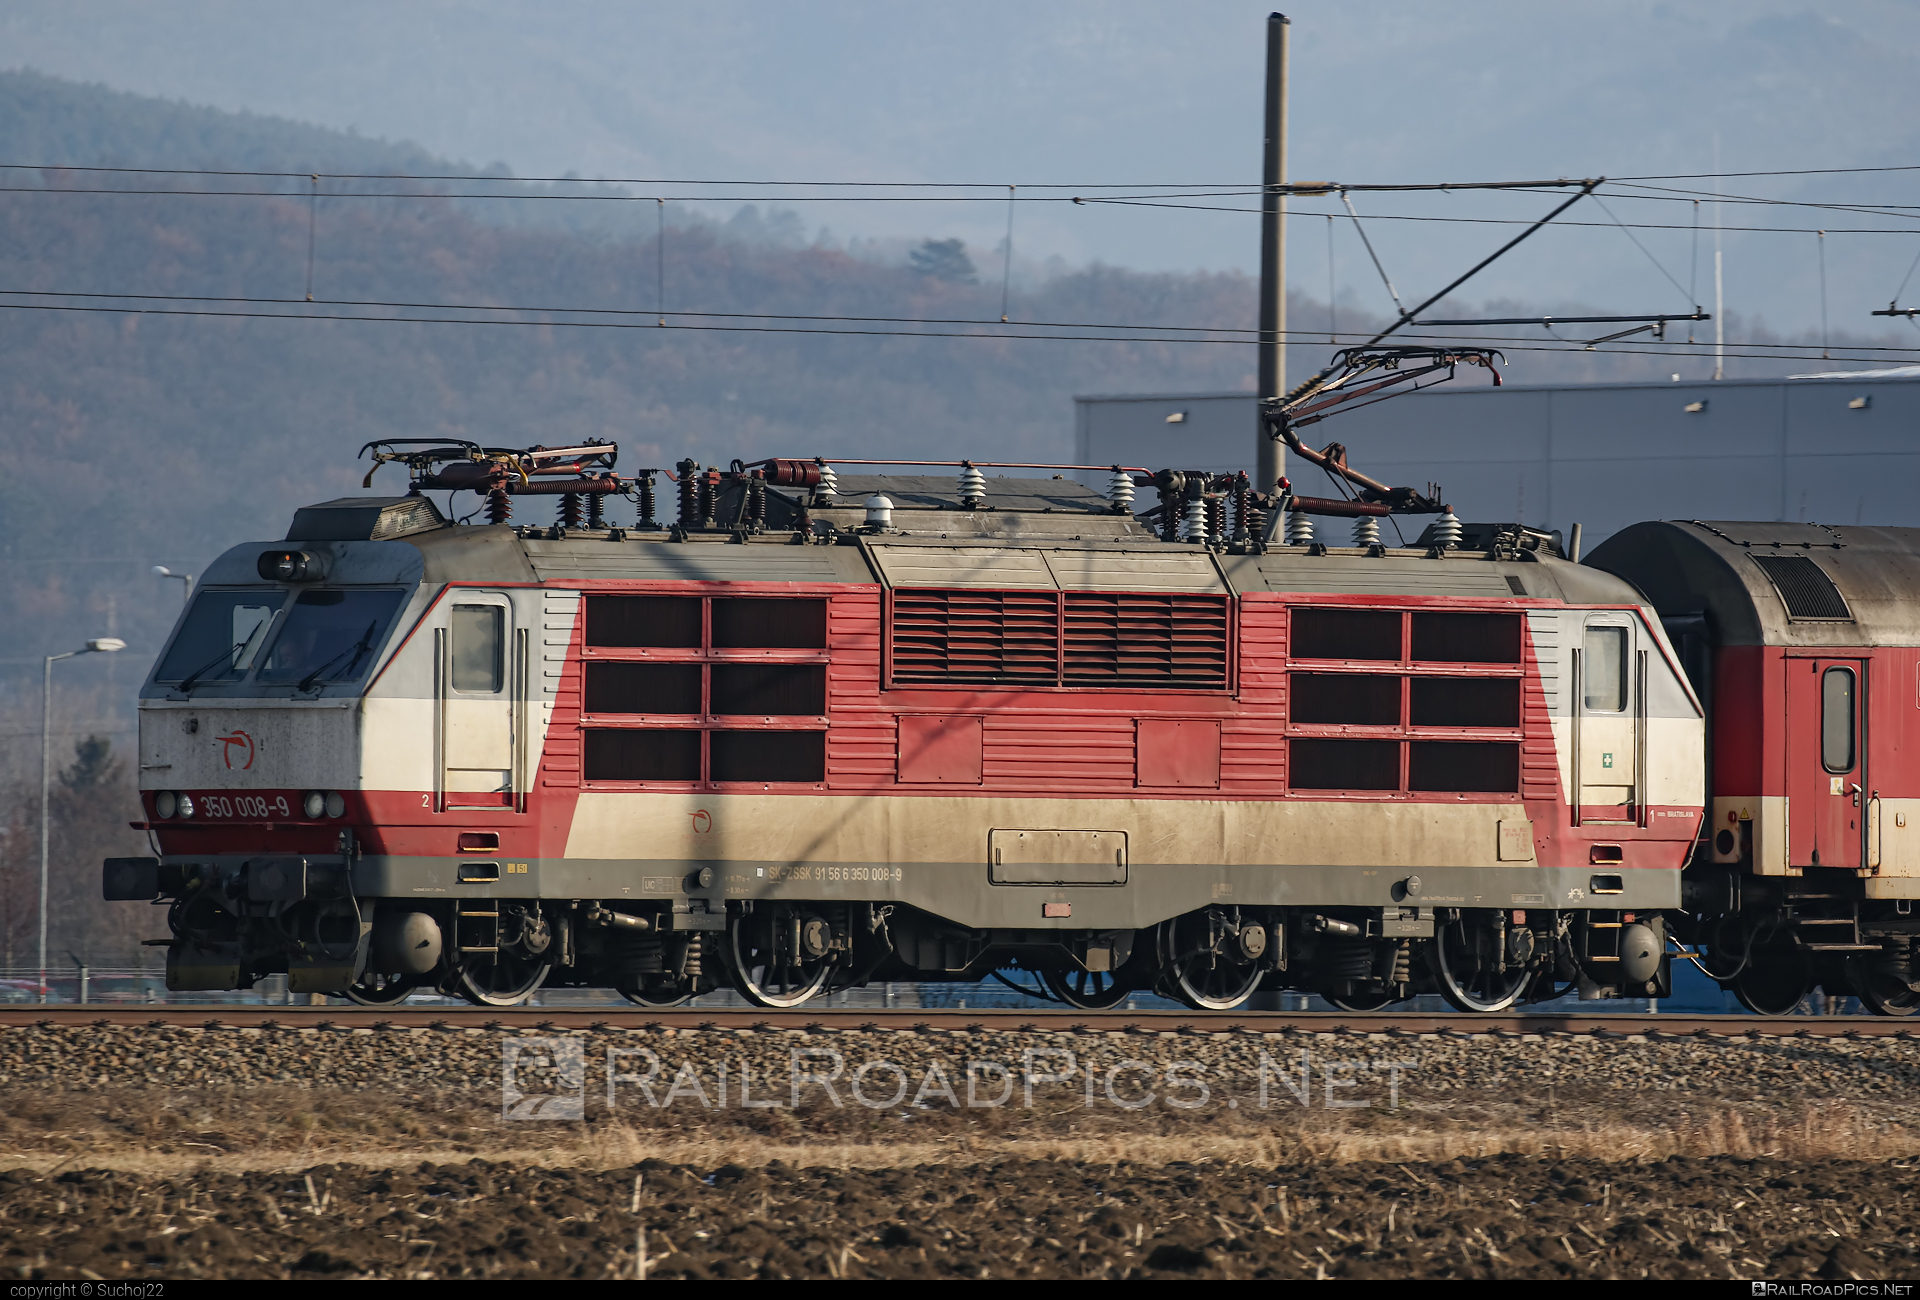 Škoda 55E - 350 008-9 operated by Železničná Spoločnost' Slovensko, a.s. #ZeleznicnaSpolocnostSlovensko #gorila #locomotive350 #skoda #skoda55e #zssk